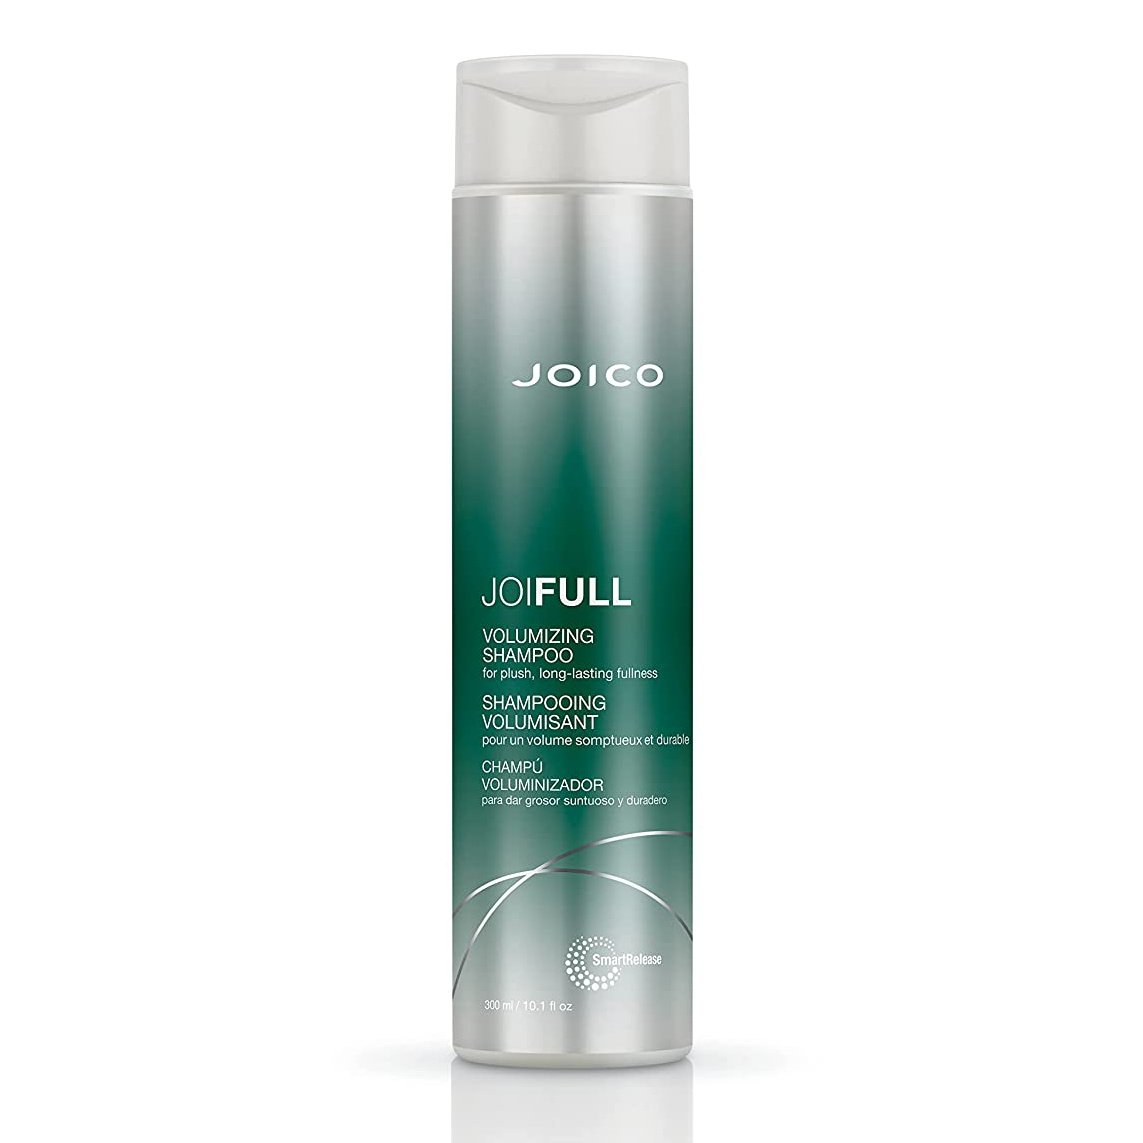 Joico Joifull Volumizing Shampoo 300 ml / 10.1 oz